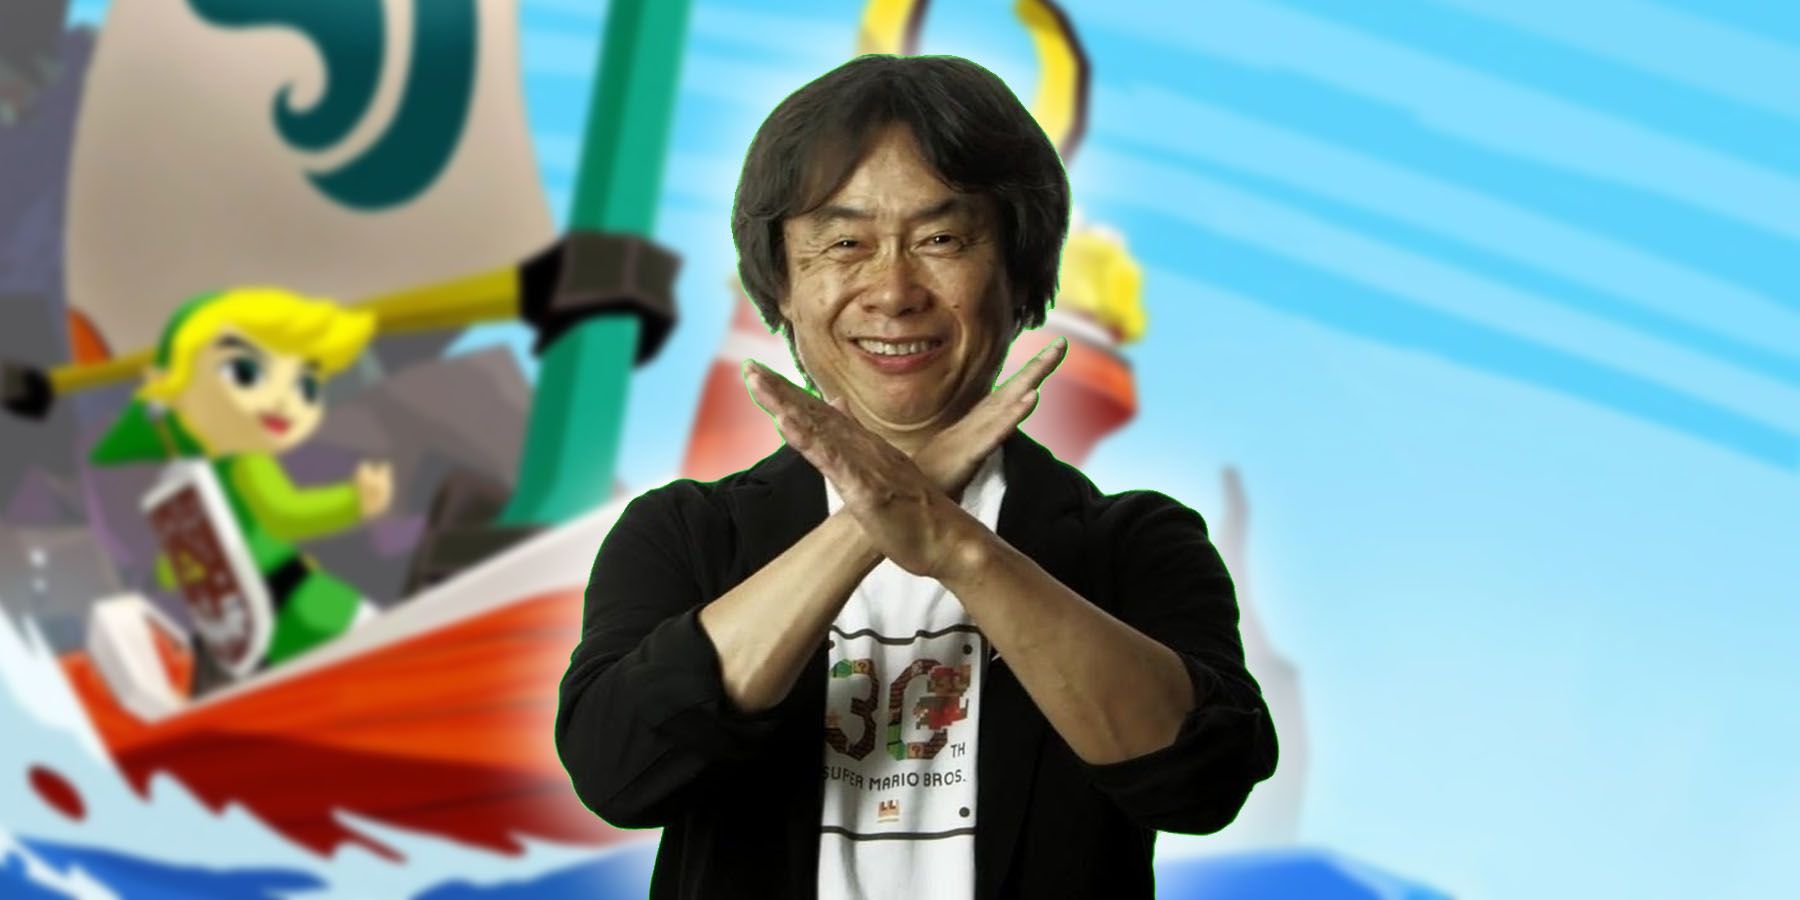 Nintendo's Shigeru Miyamoto reveals Link's full name in The Legend